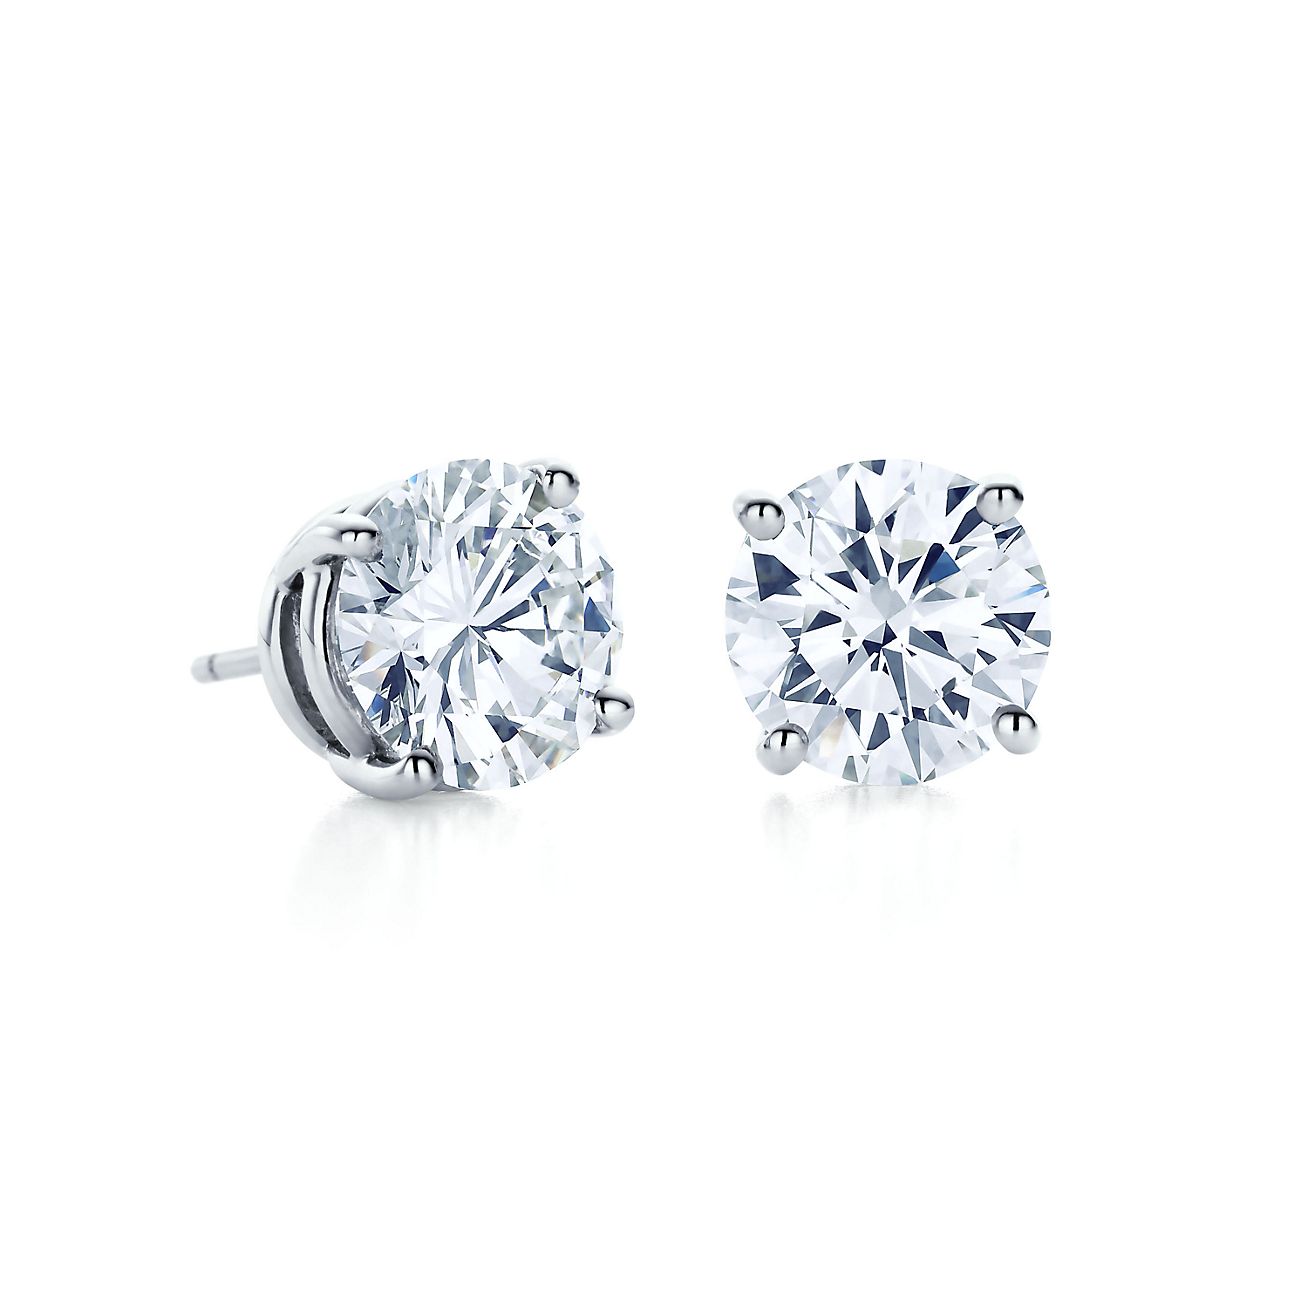 Tiffany & Co Solitaire Diamond Earrings for Sale in Houston, TX - OfferUp